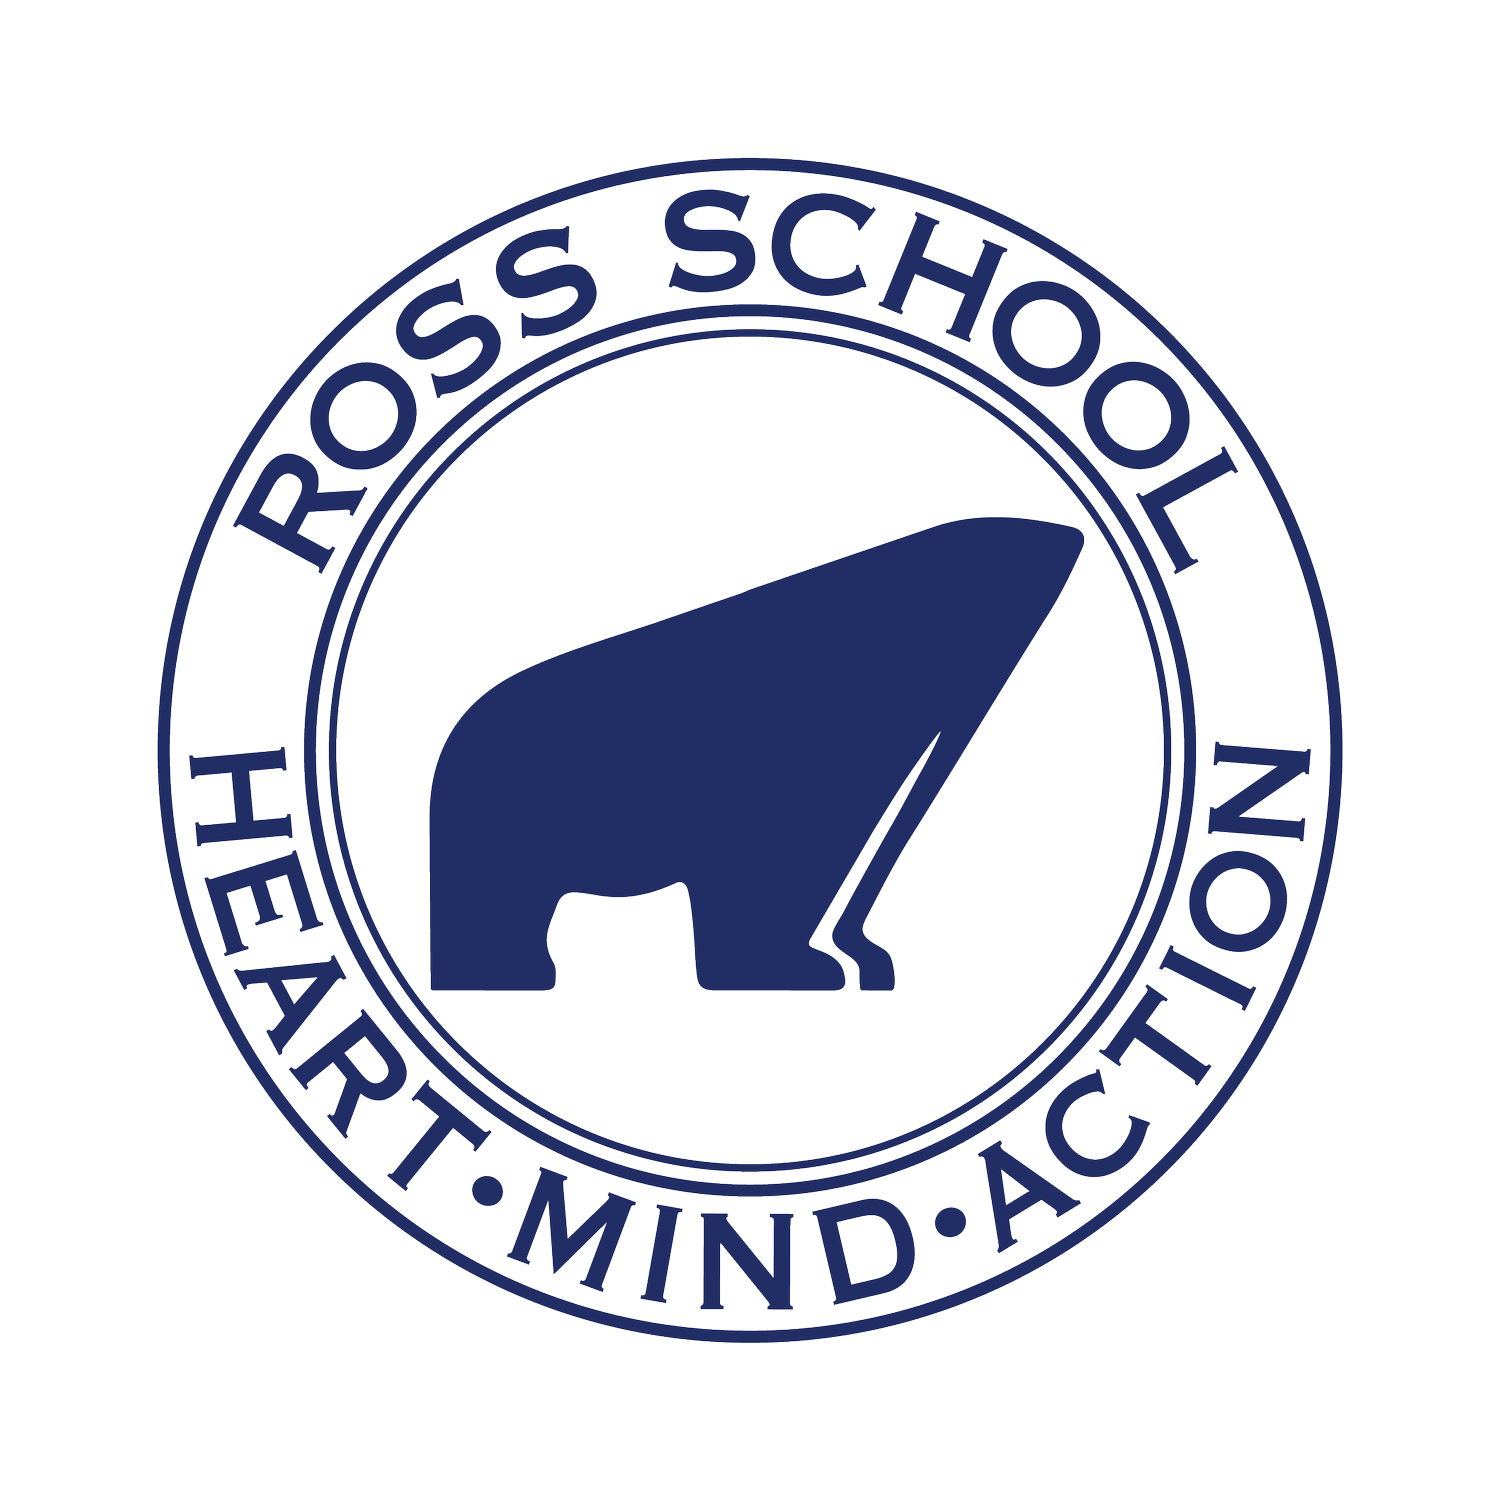 Ross School Foundation